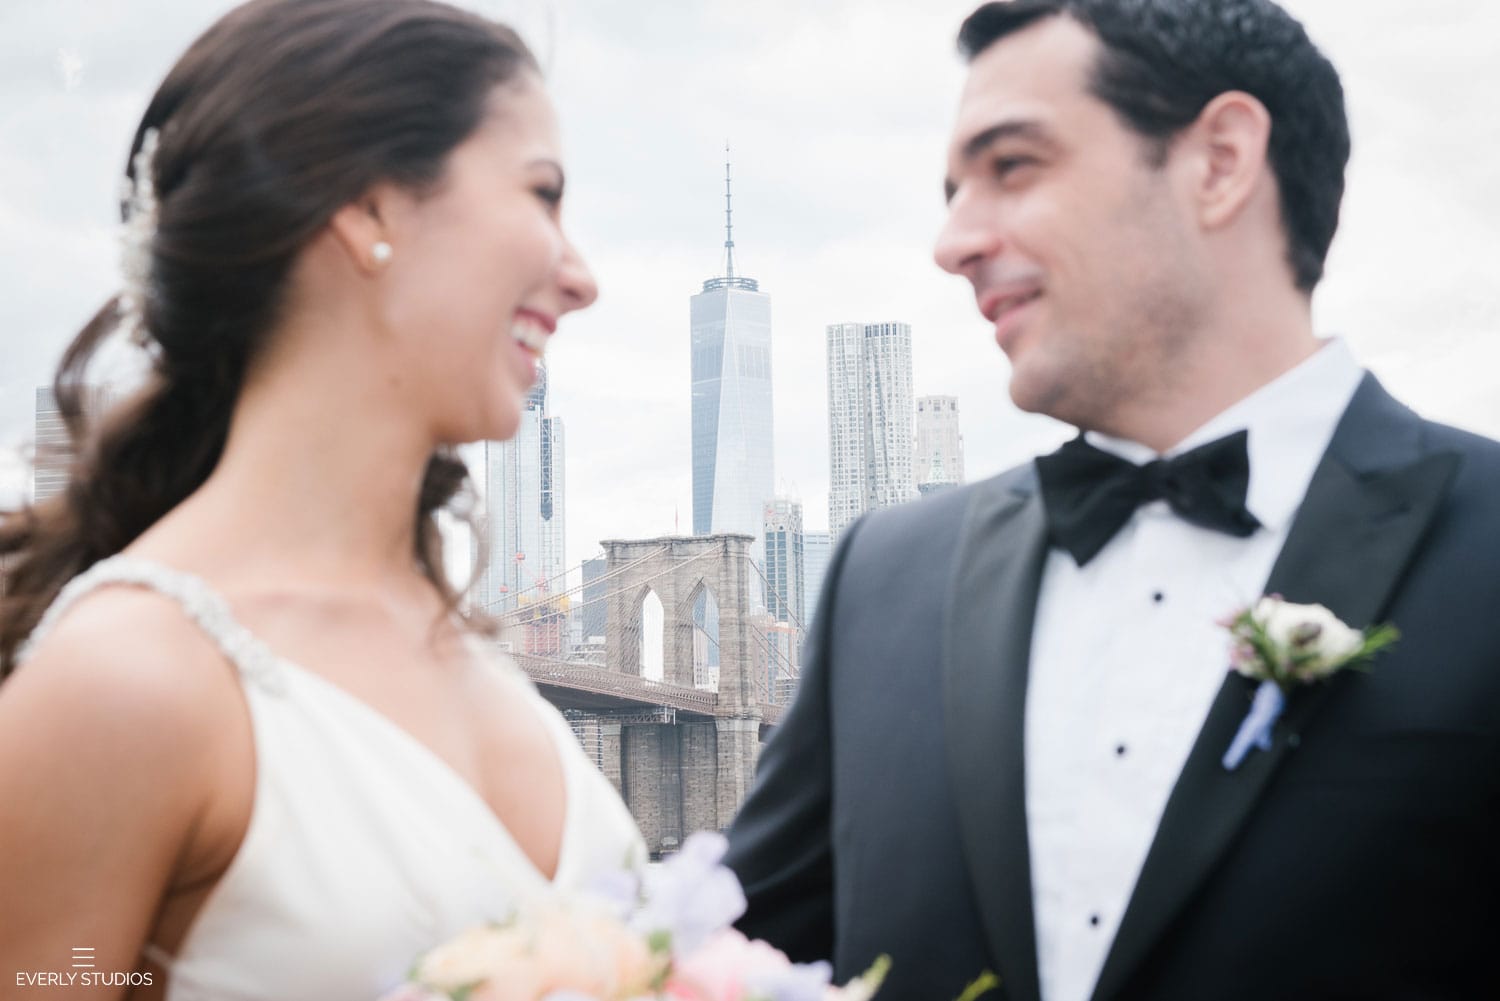 Brooklyn Bridge Park wedding photos